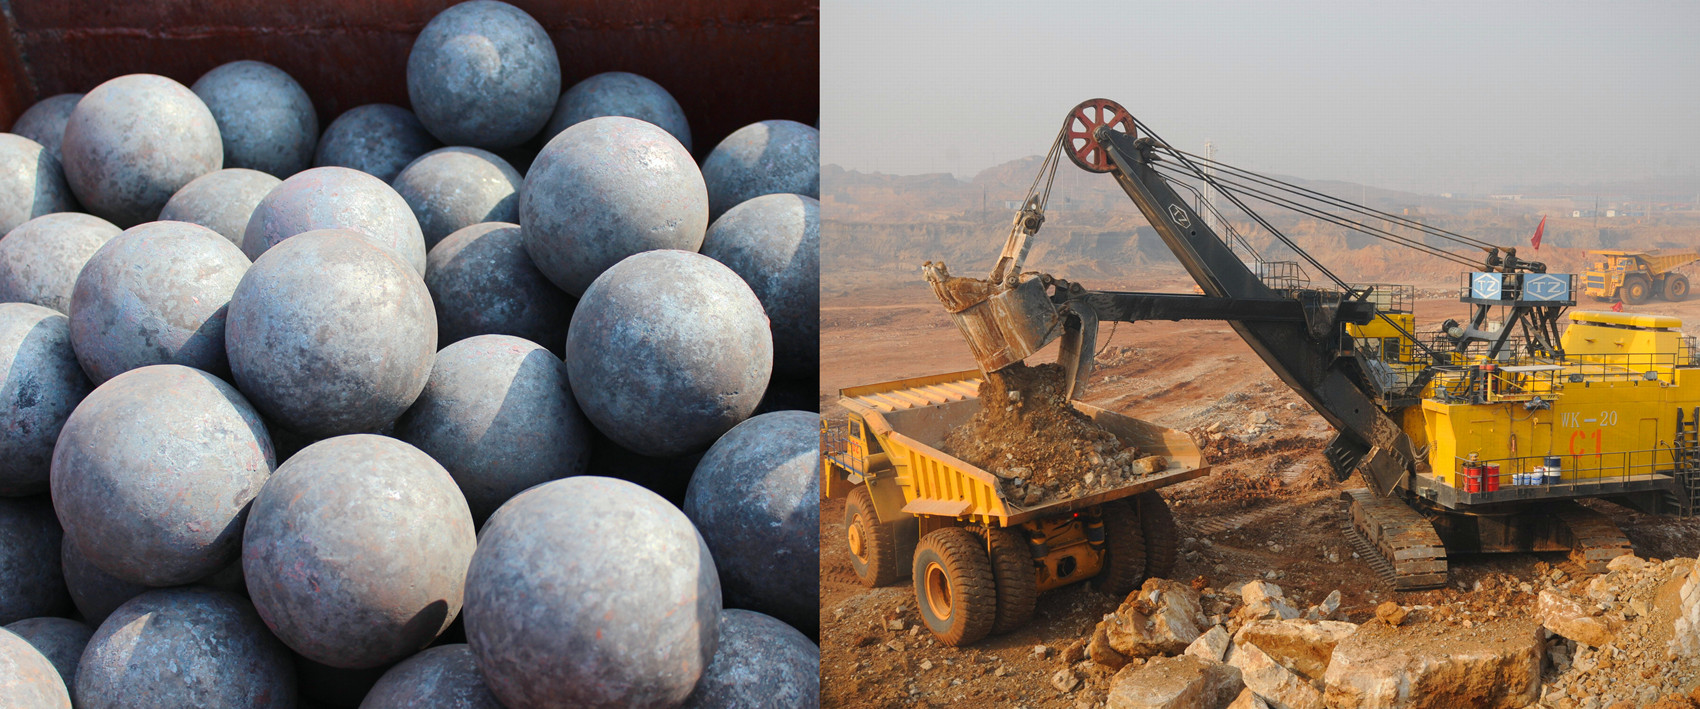 chrome balls for cement